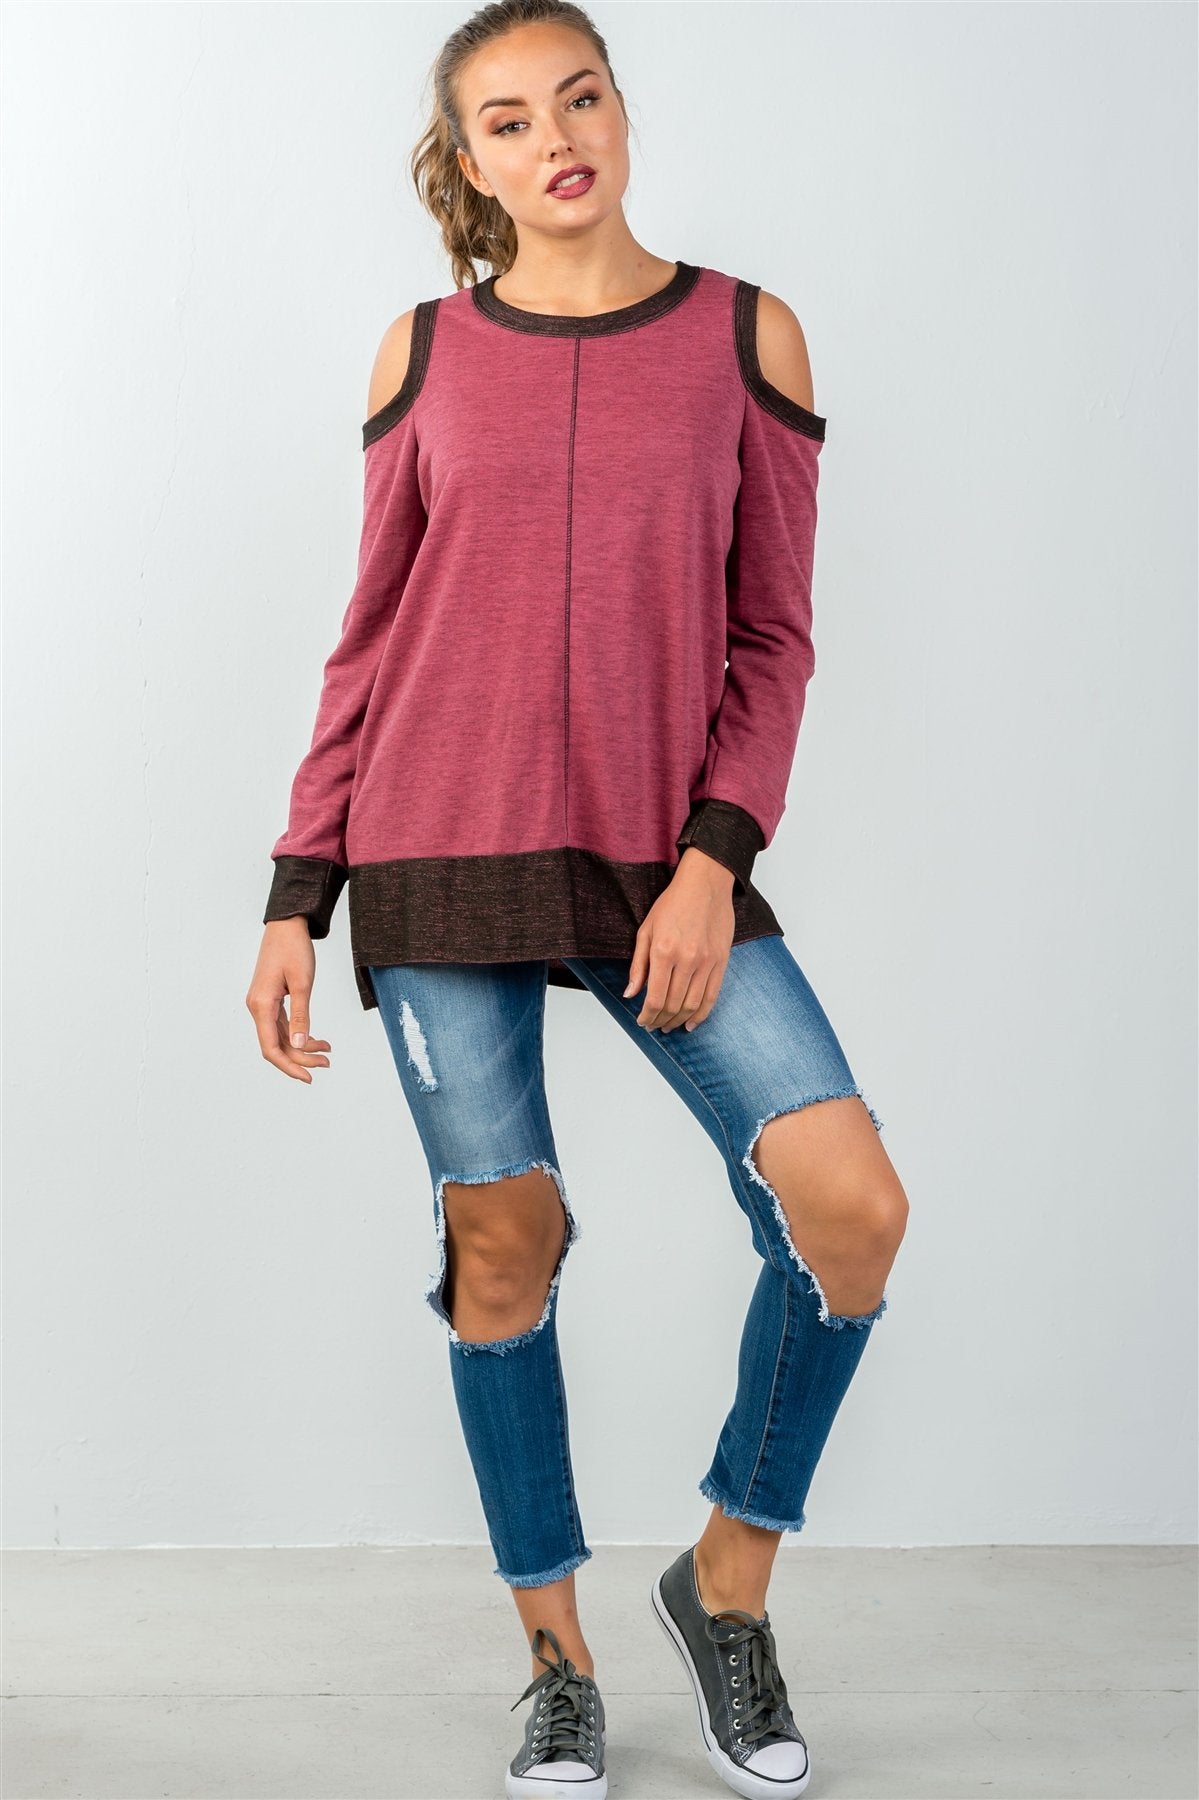 Ladies fashion cold shoulder hi-low colorblock sweatshirt